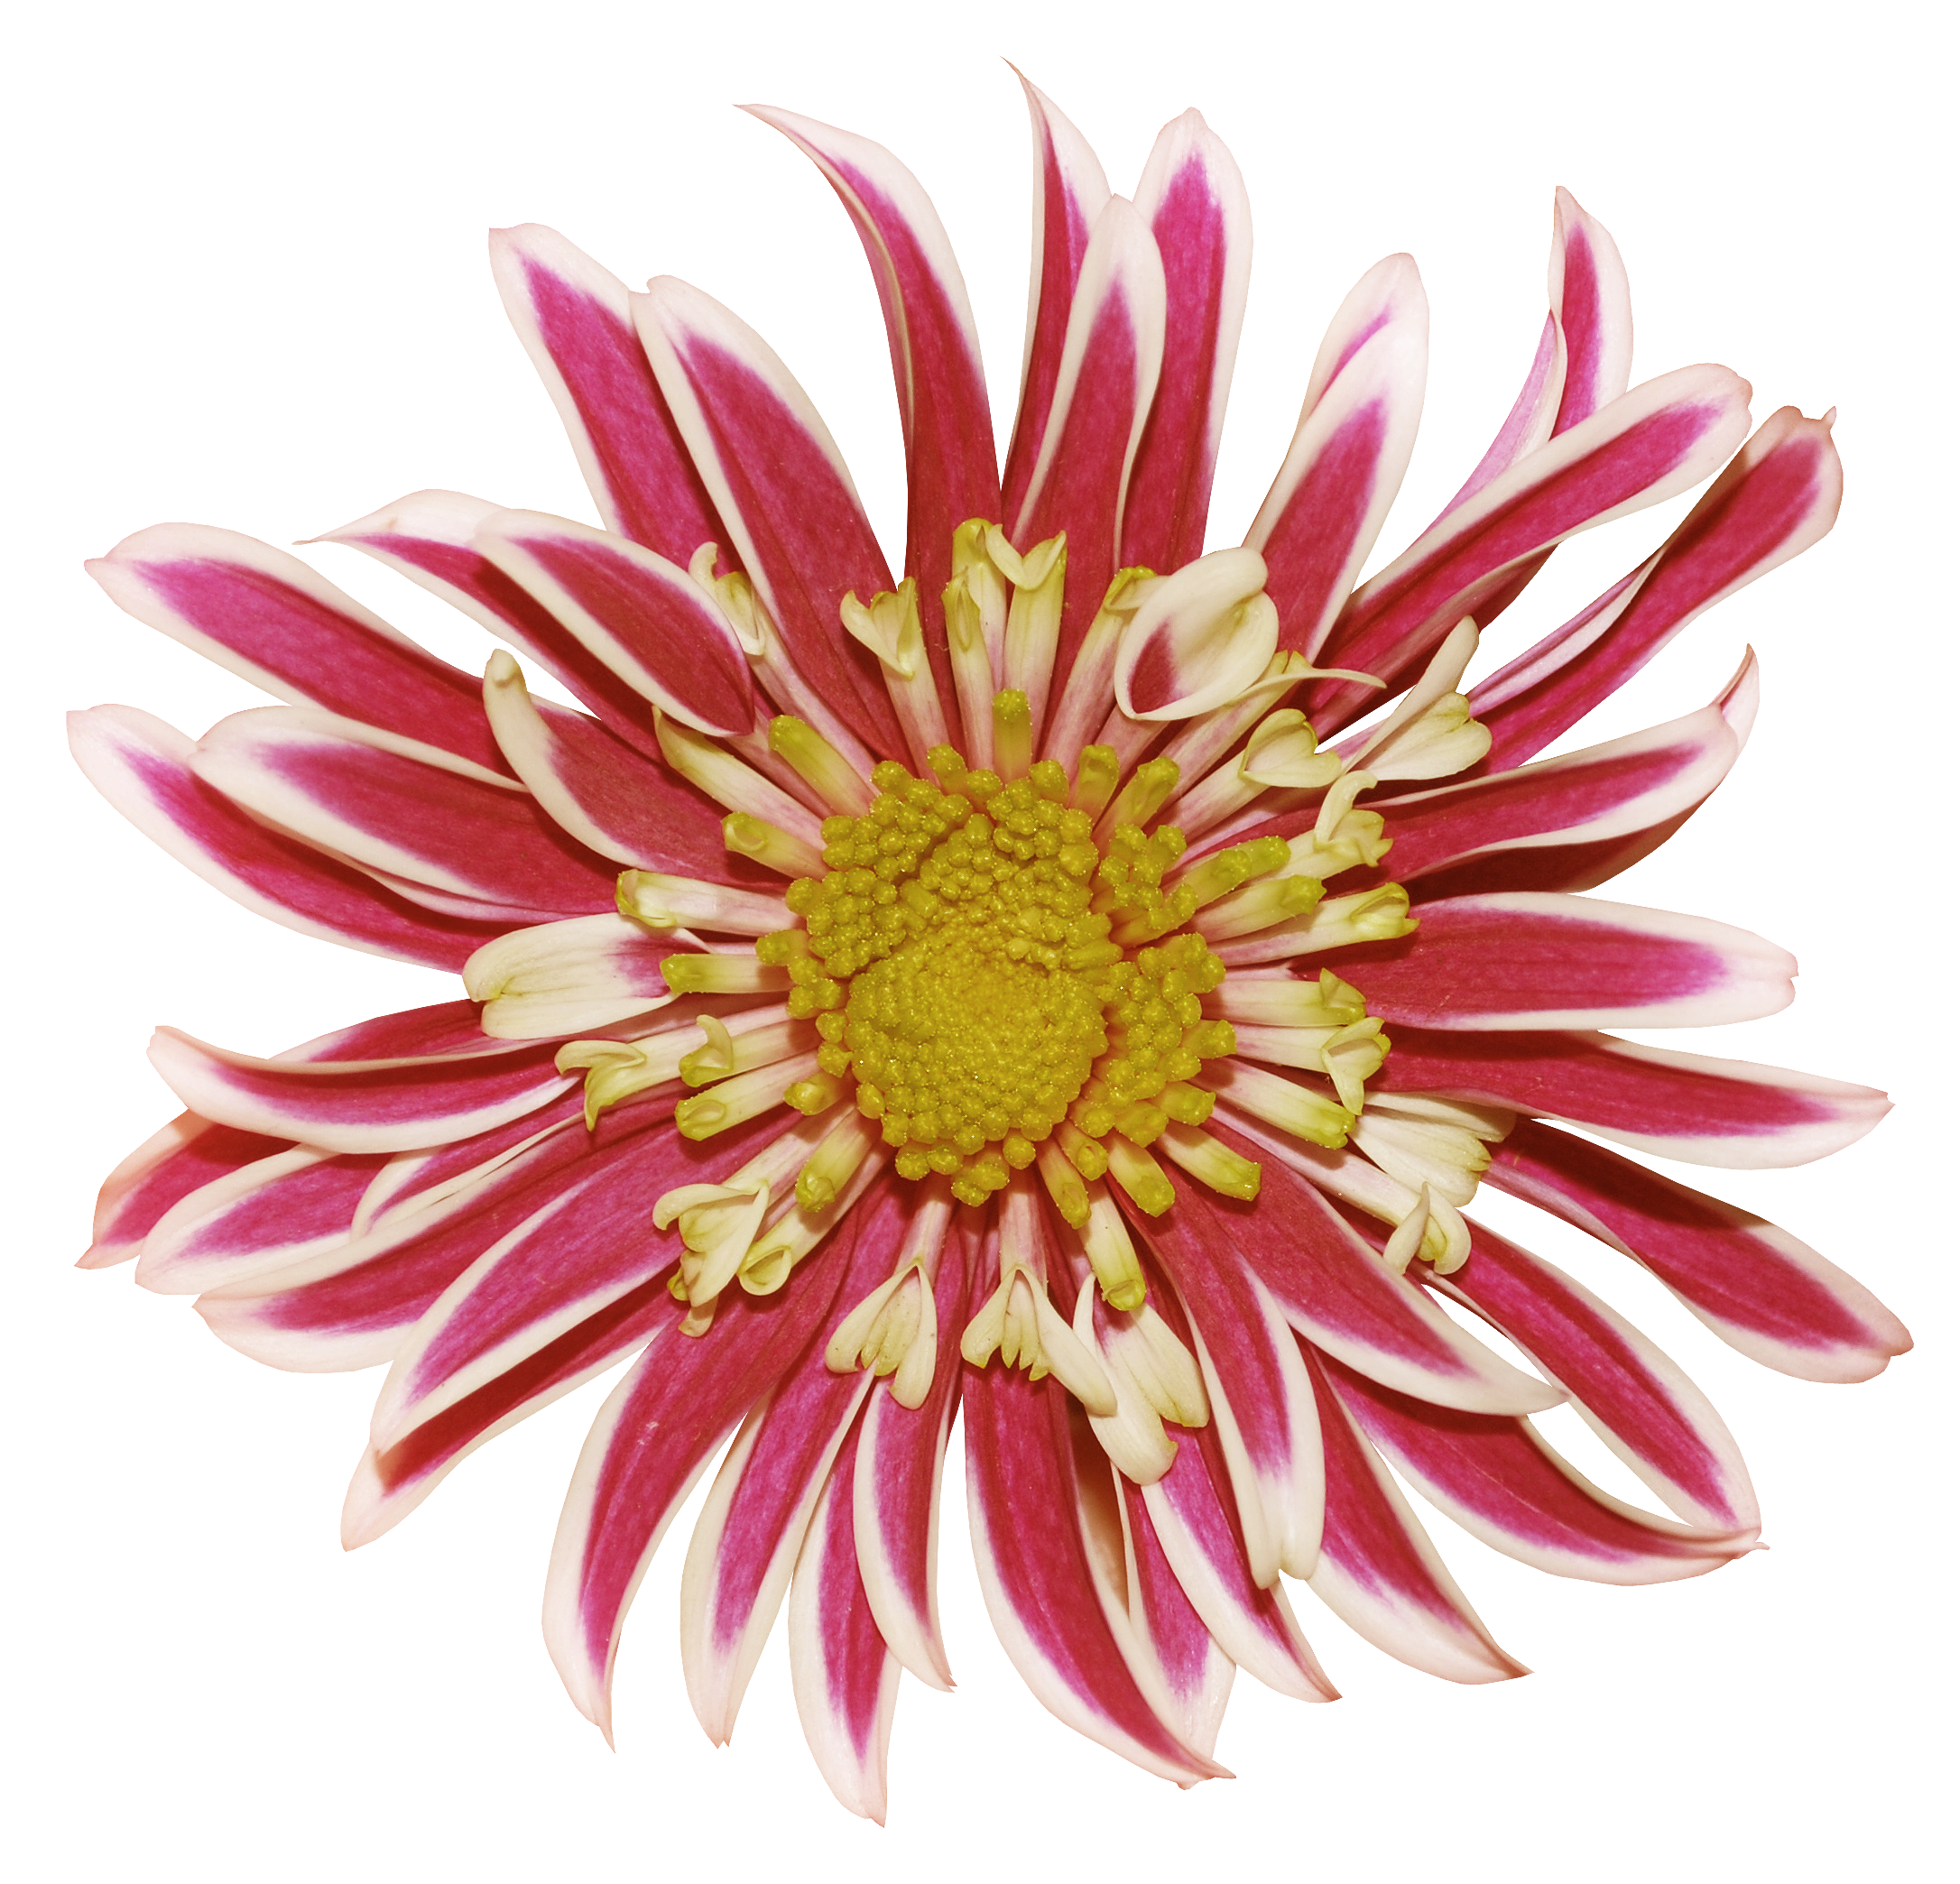 daisies clipart chrysanthemum flower